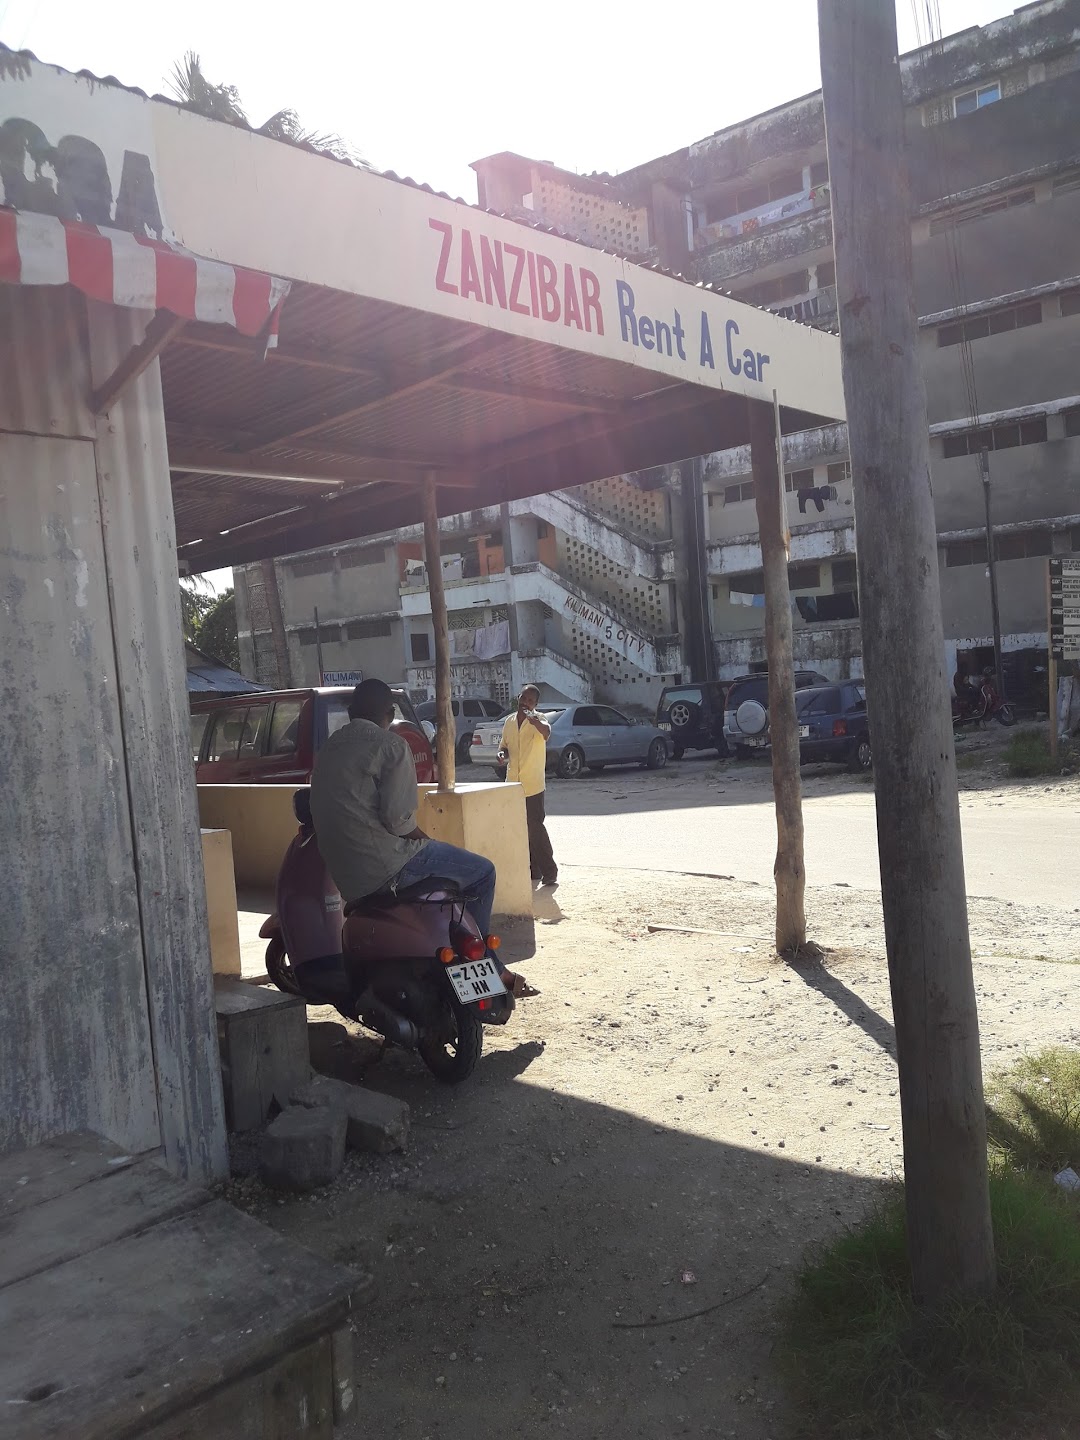 Zanzibar Rent A Car Ltd